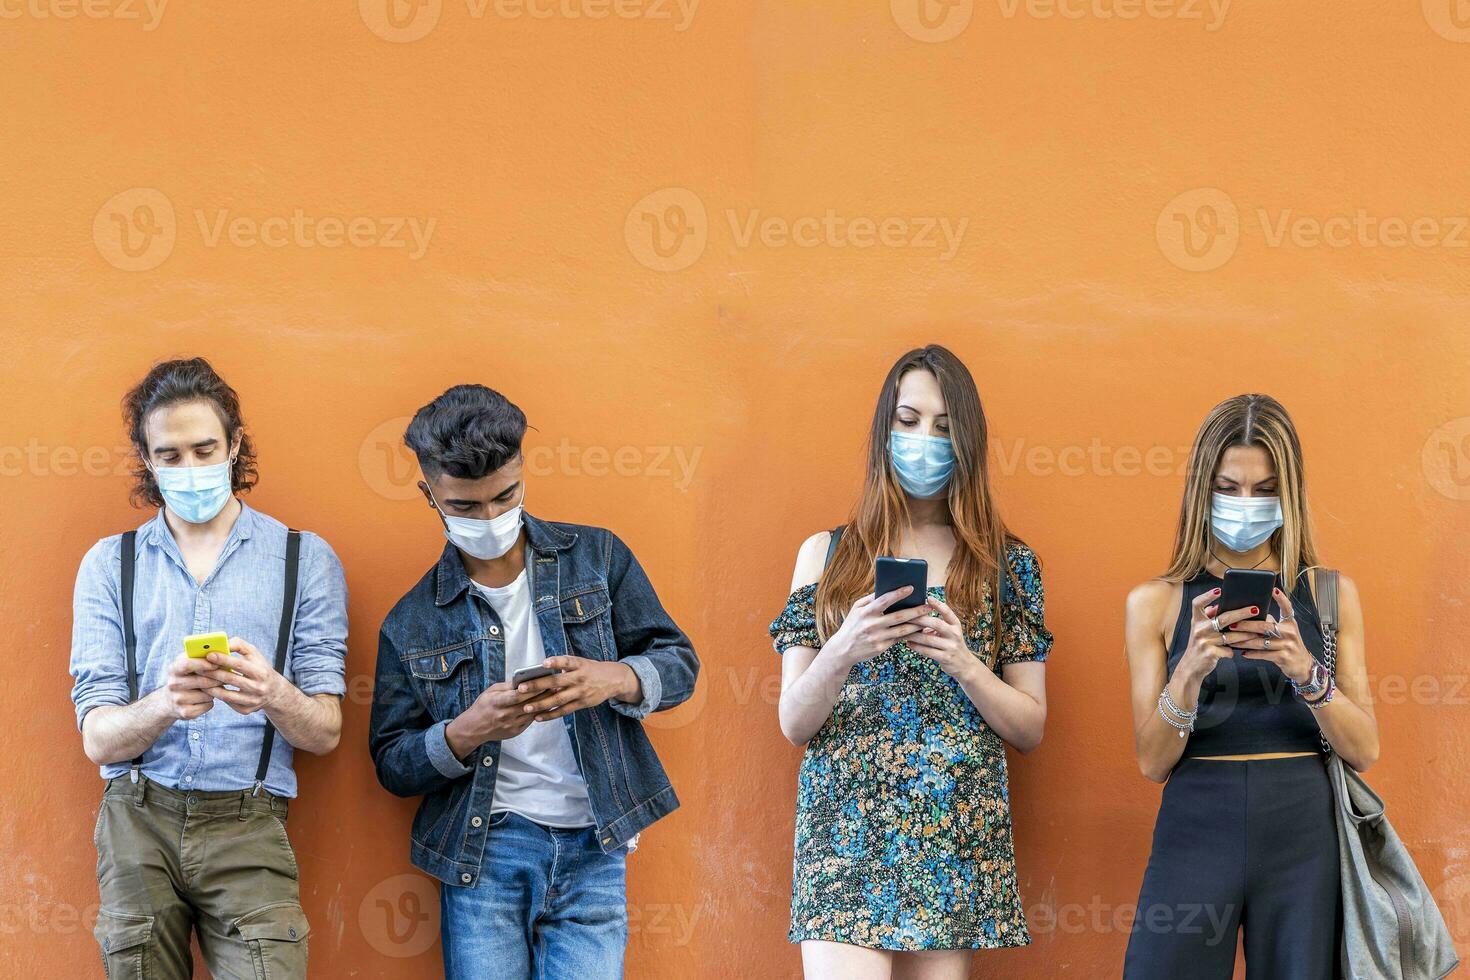 grupo do multirracial amigos com face máscaras dentro frente do laranja parede foto